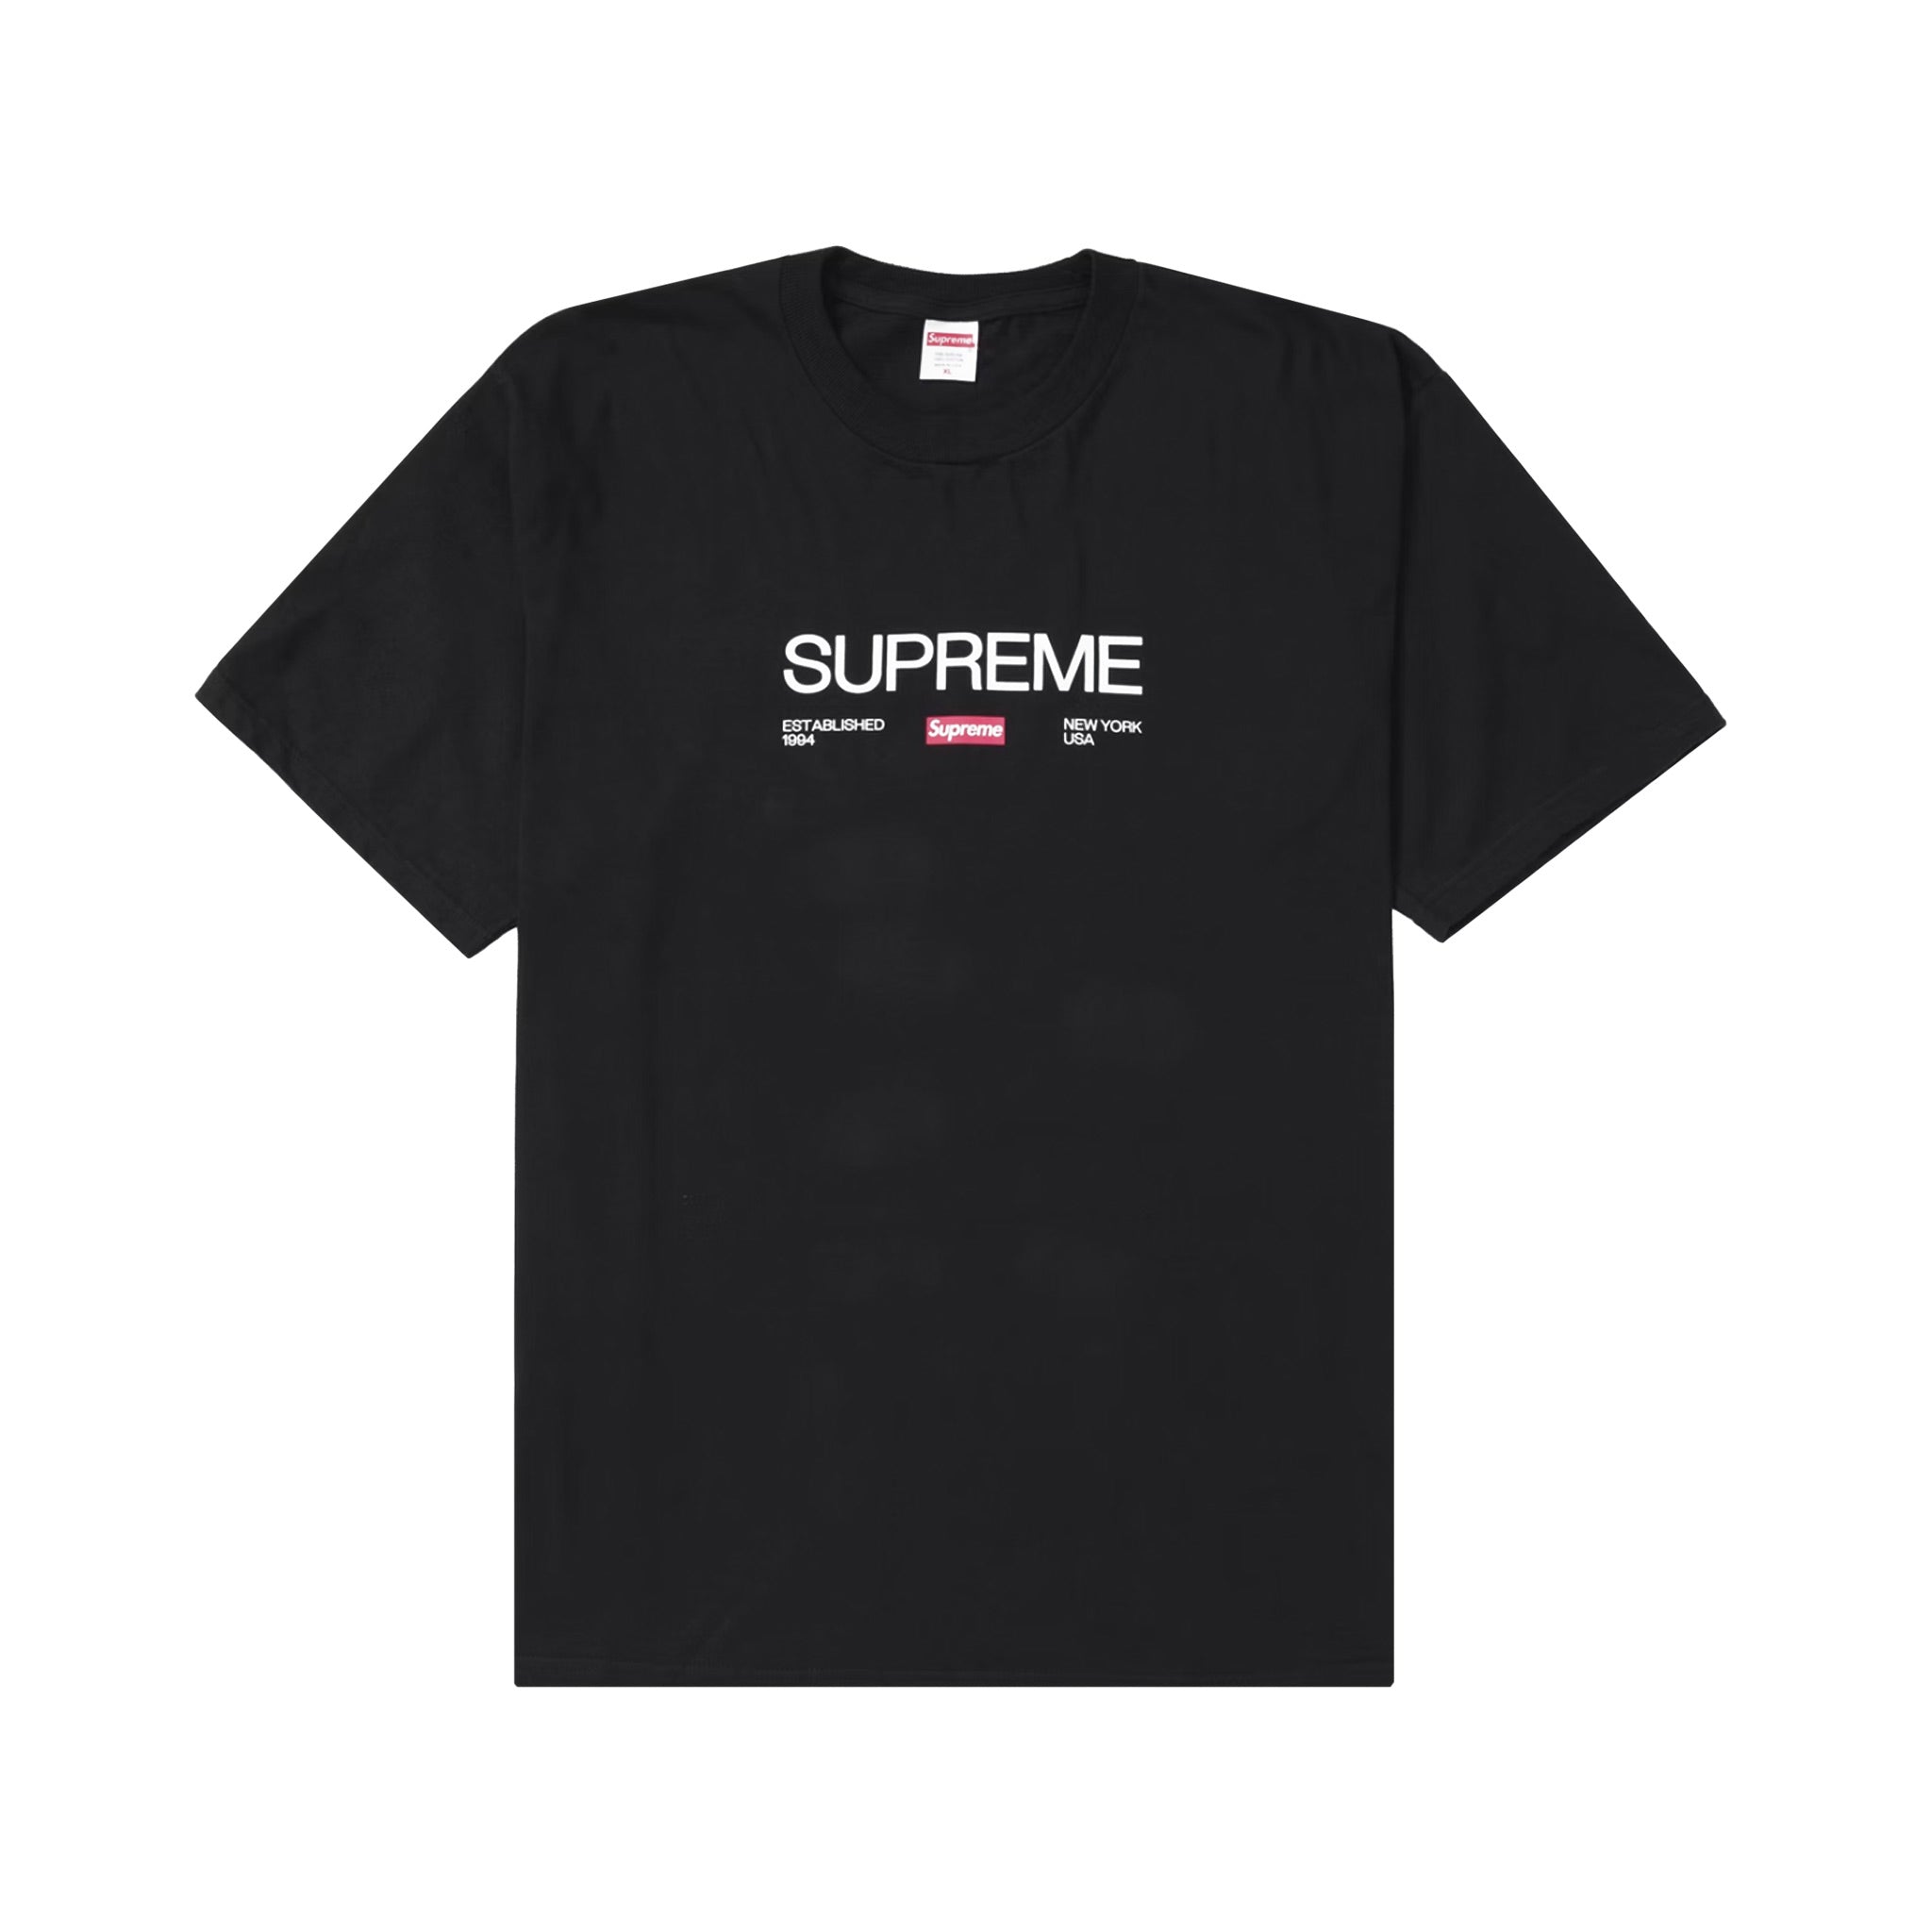 Supreme Est. 1994 Tee - Black | Australia New Zealand